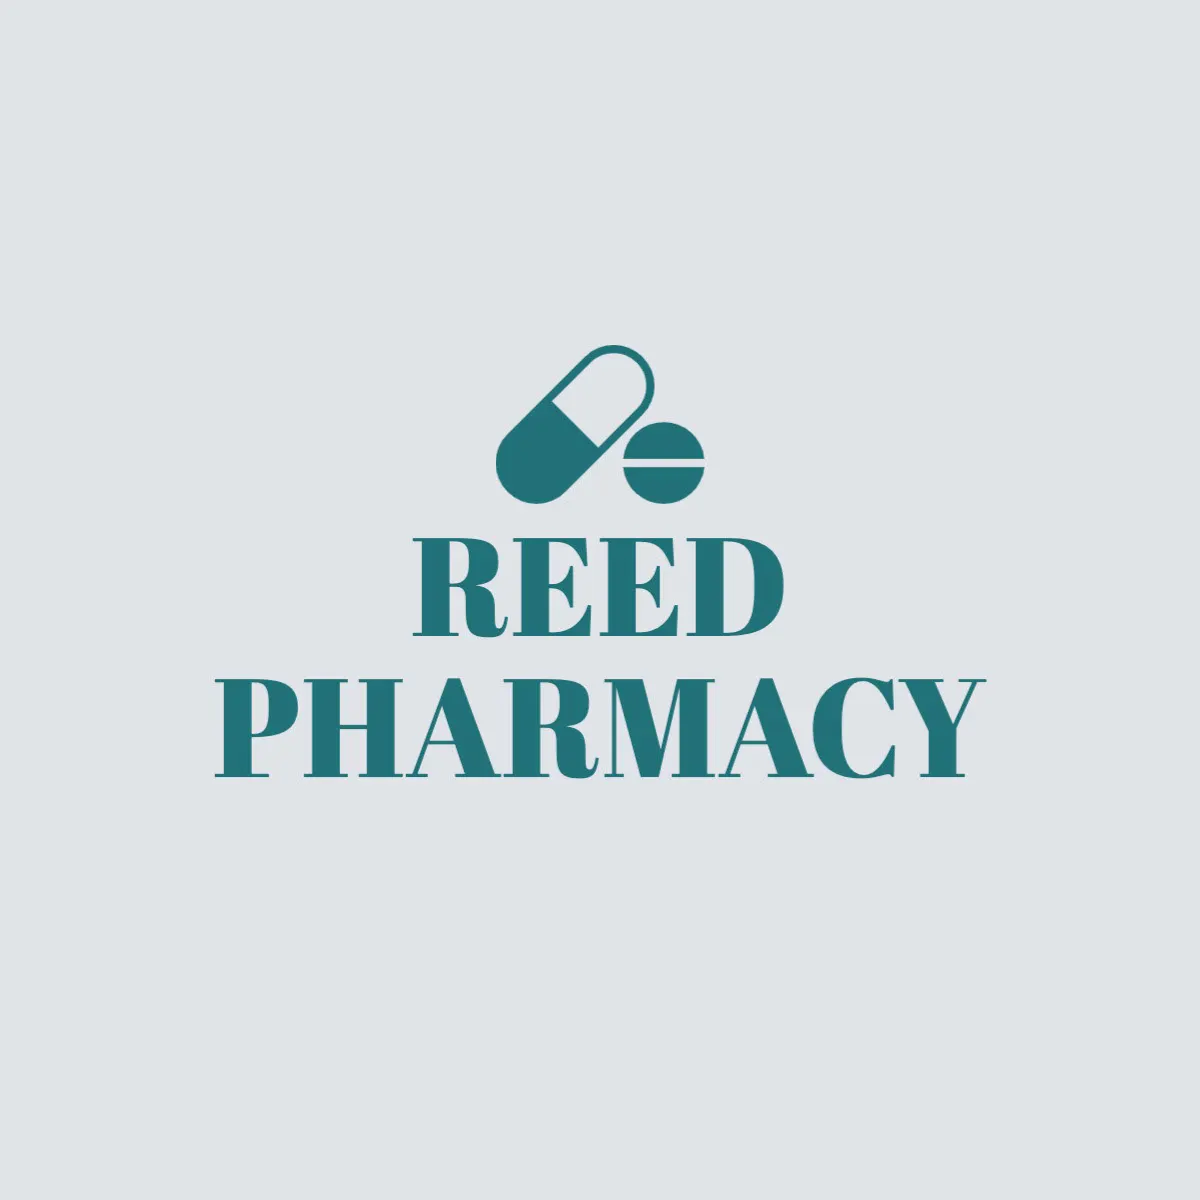 Teal Pharmacy Logo